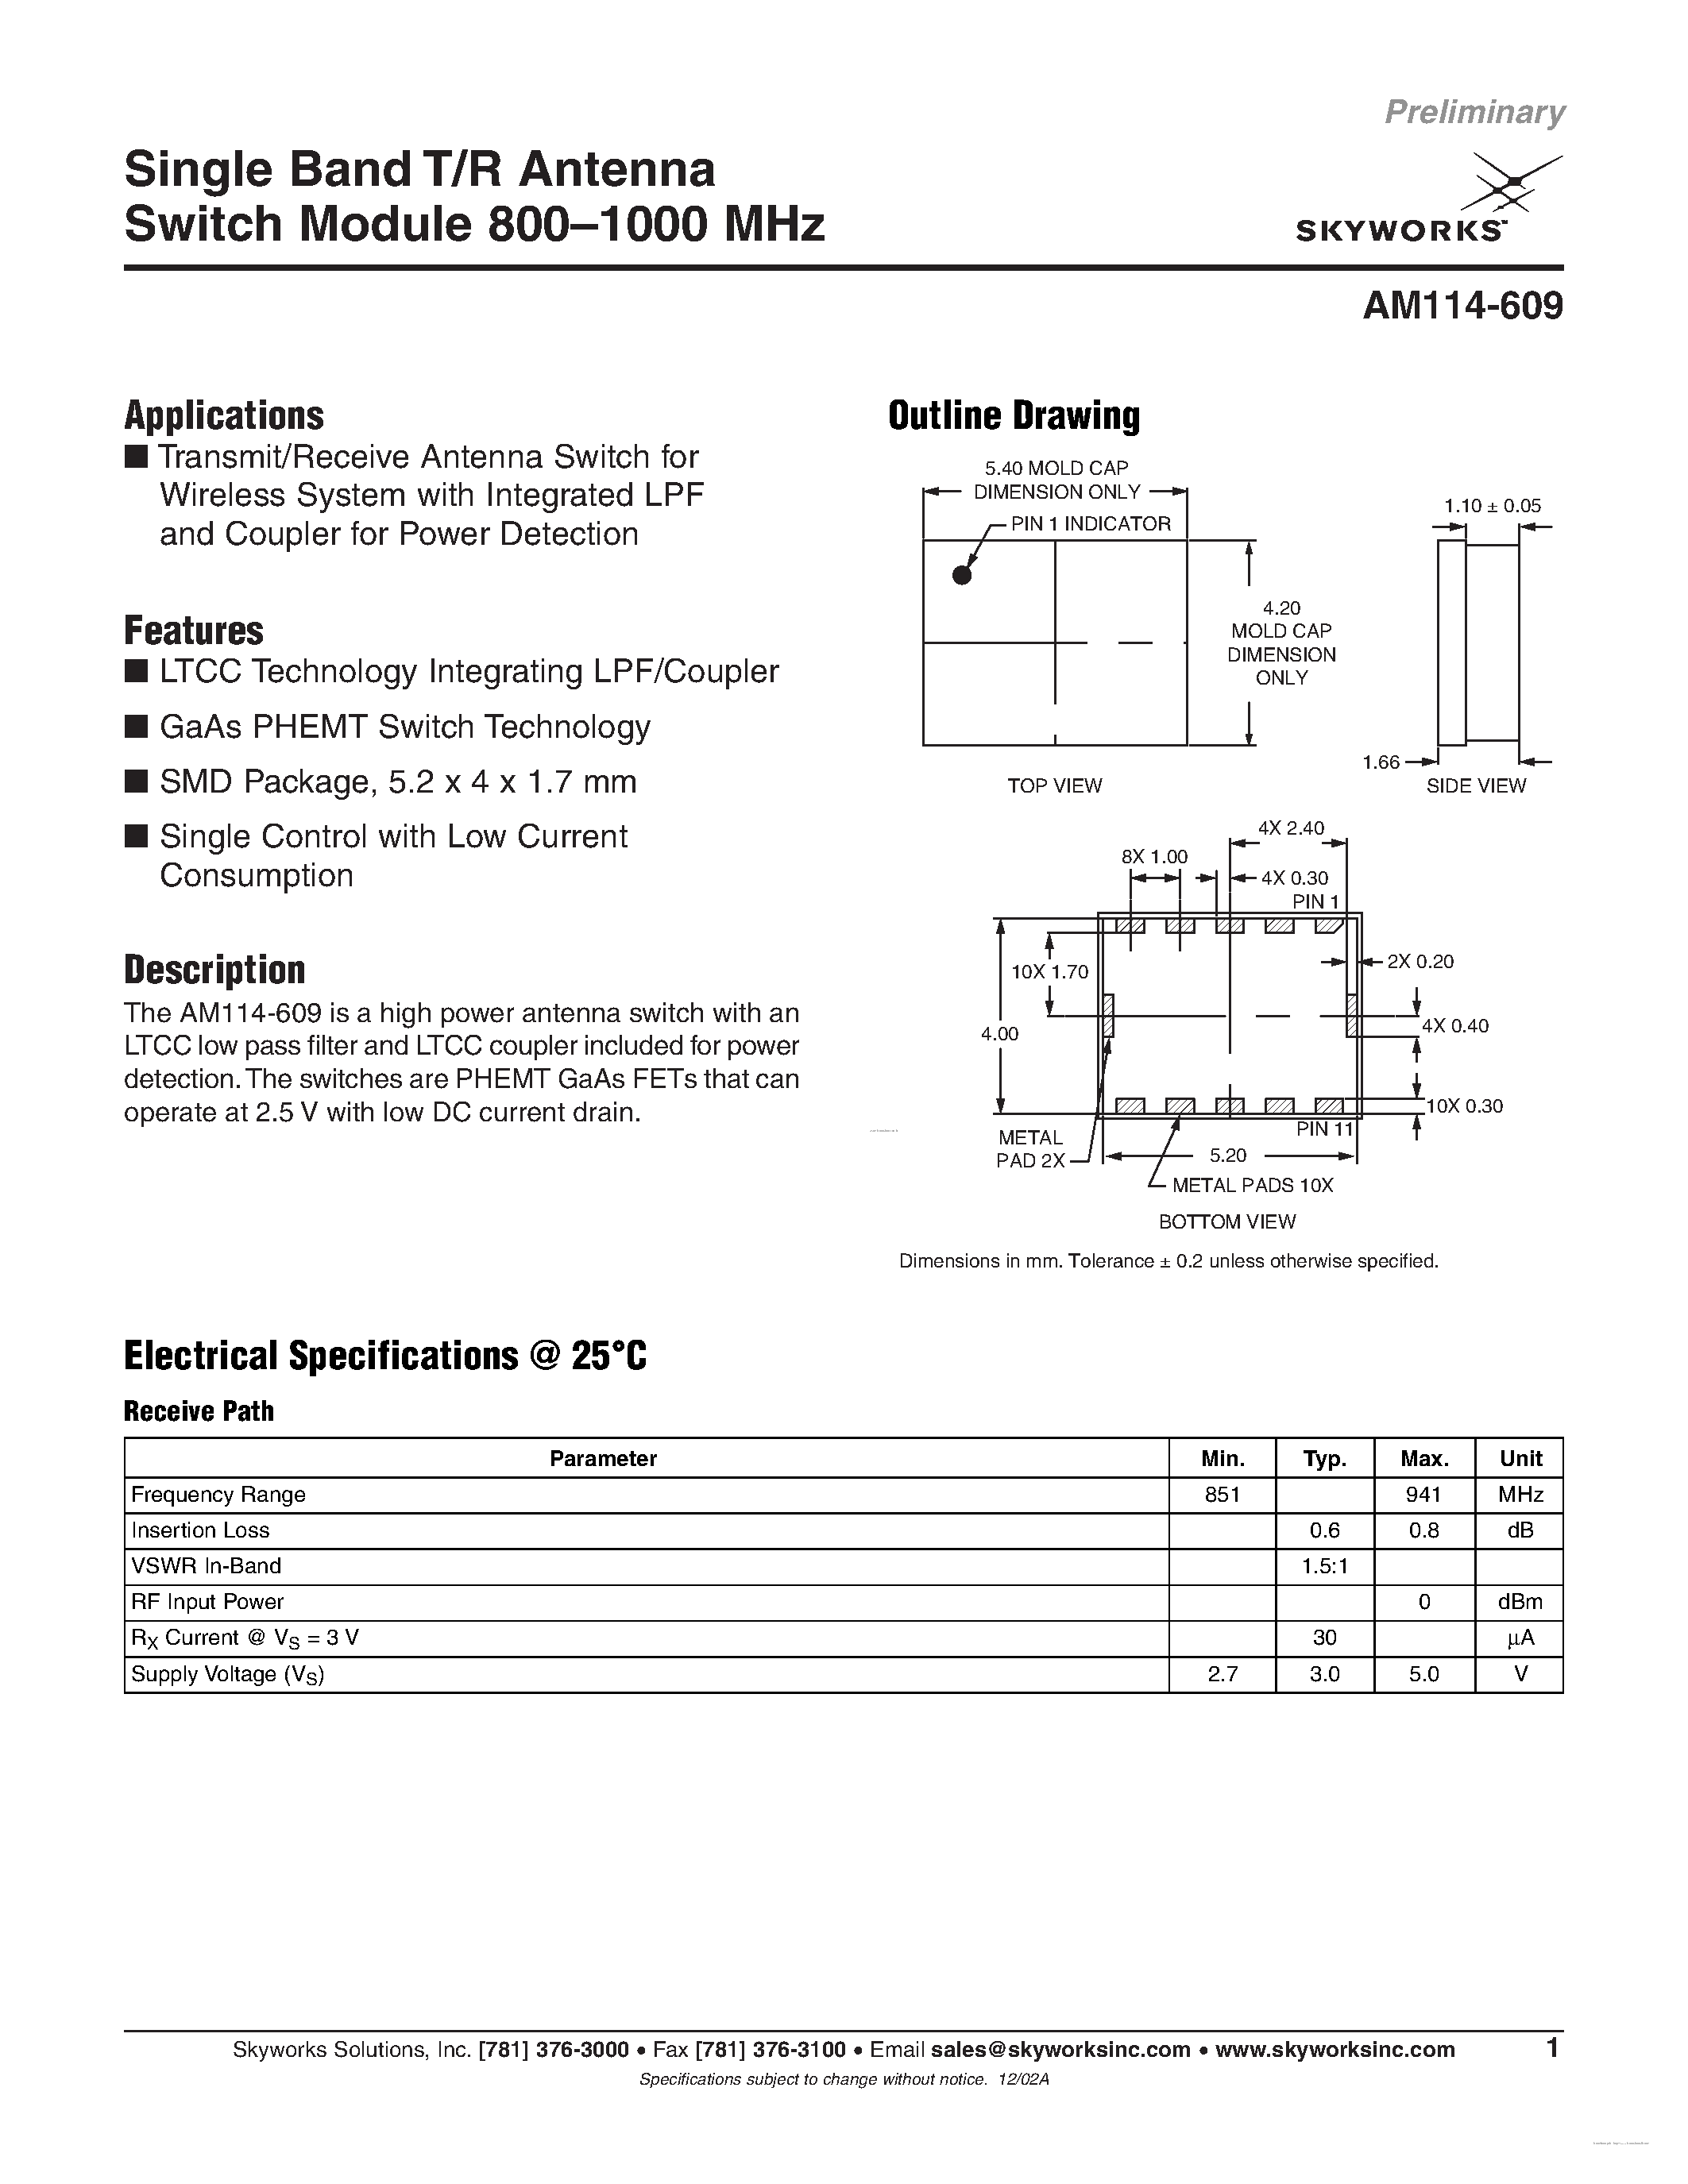 Datasheet AM114-609 - Single Band T/R Antenna page 1